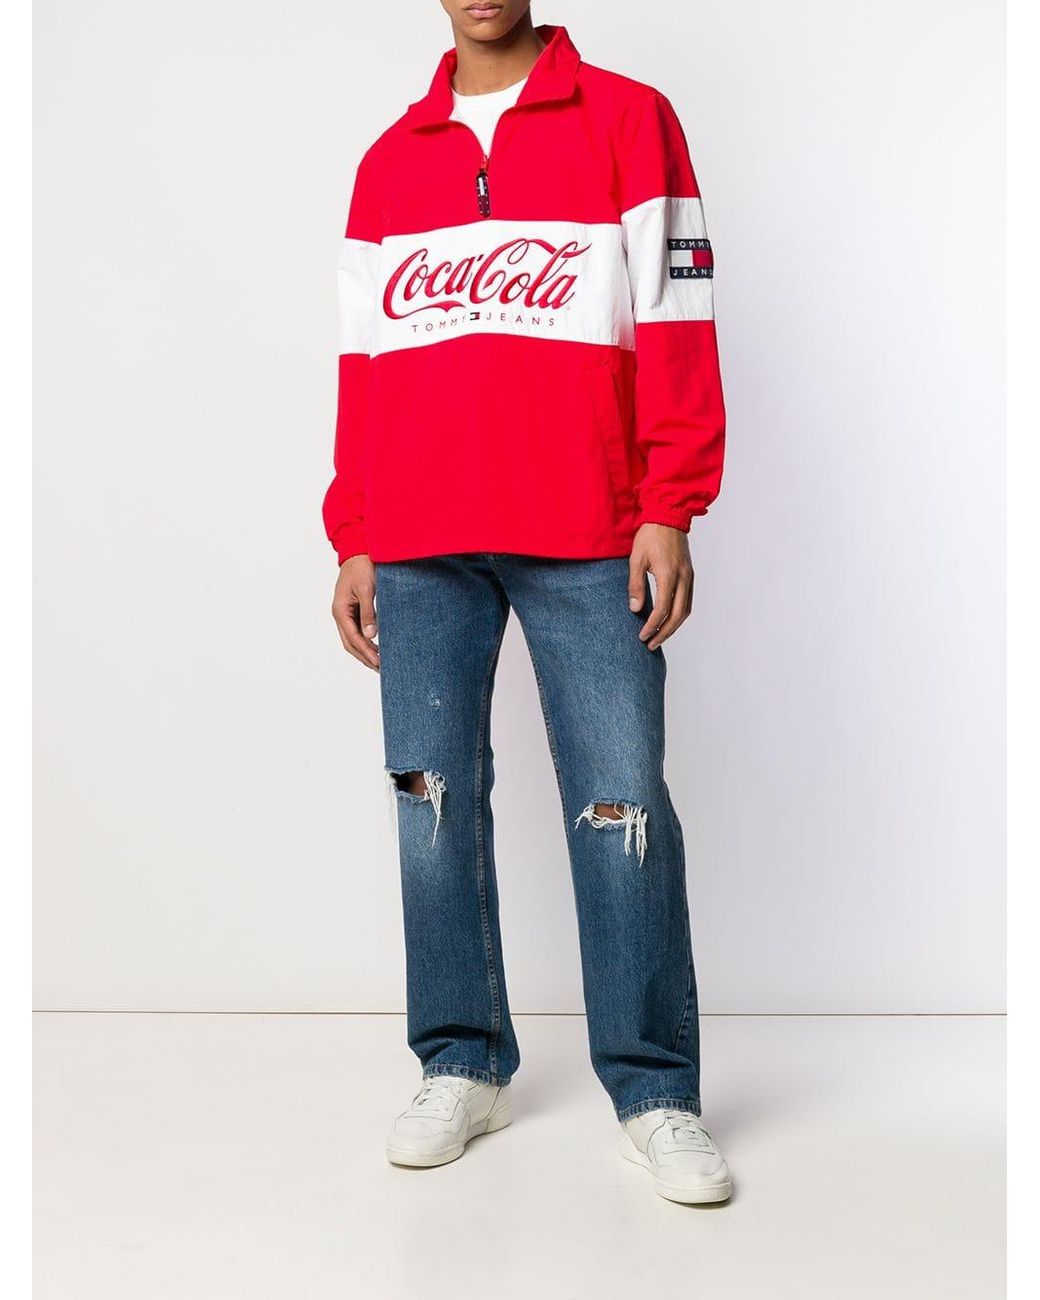 Tommy Hilfiger X Coca-cola Popover Jacket in Red for Men | Lyst UK